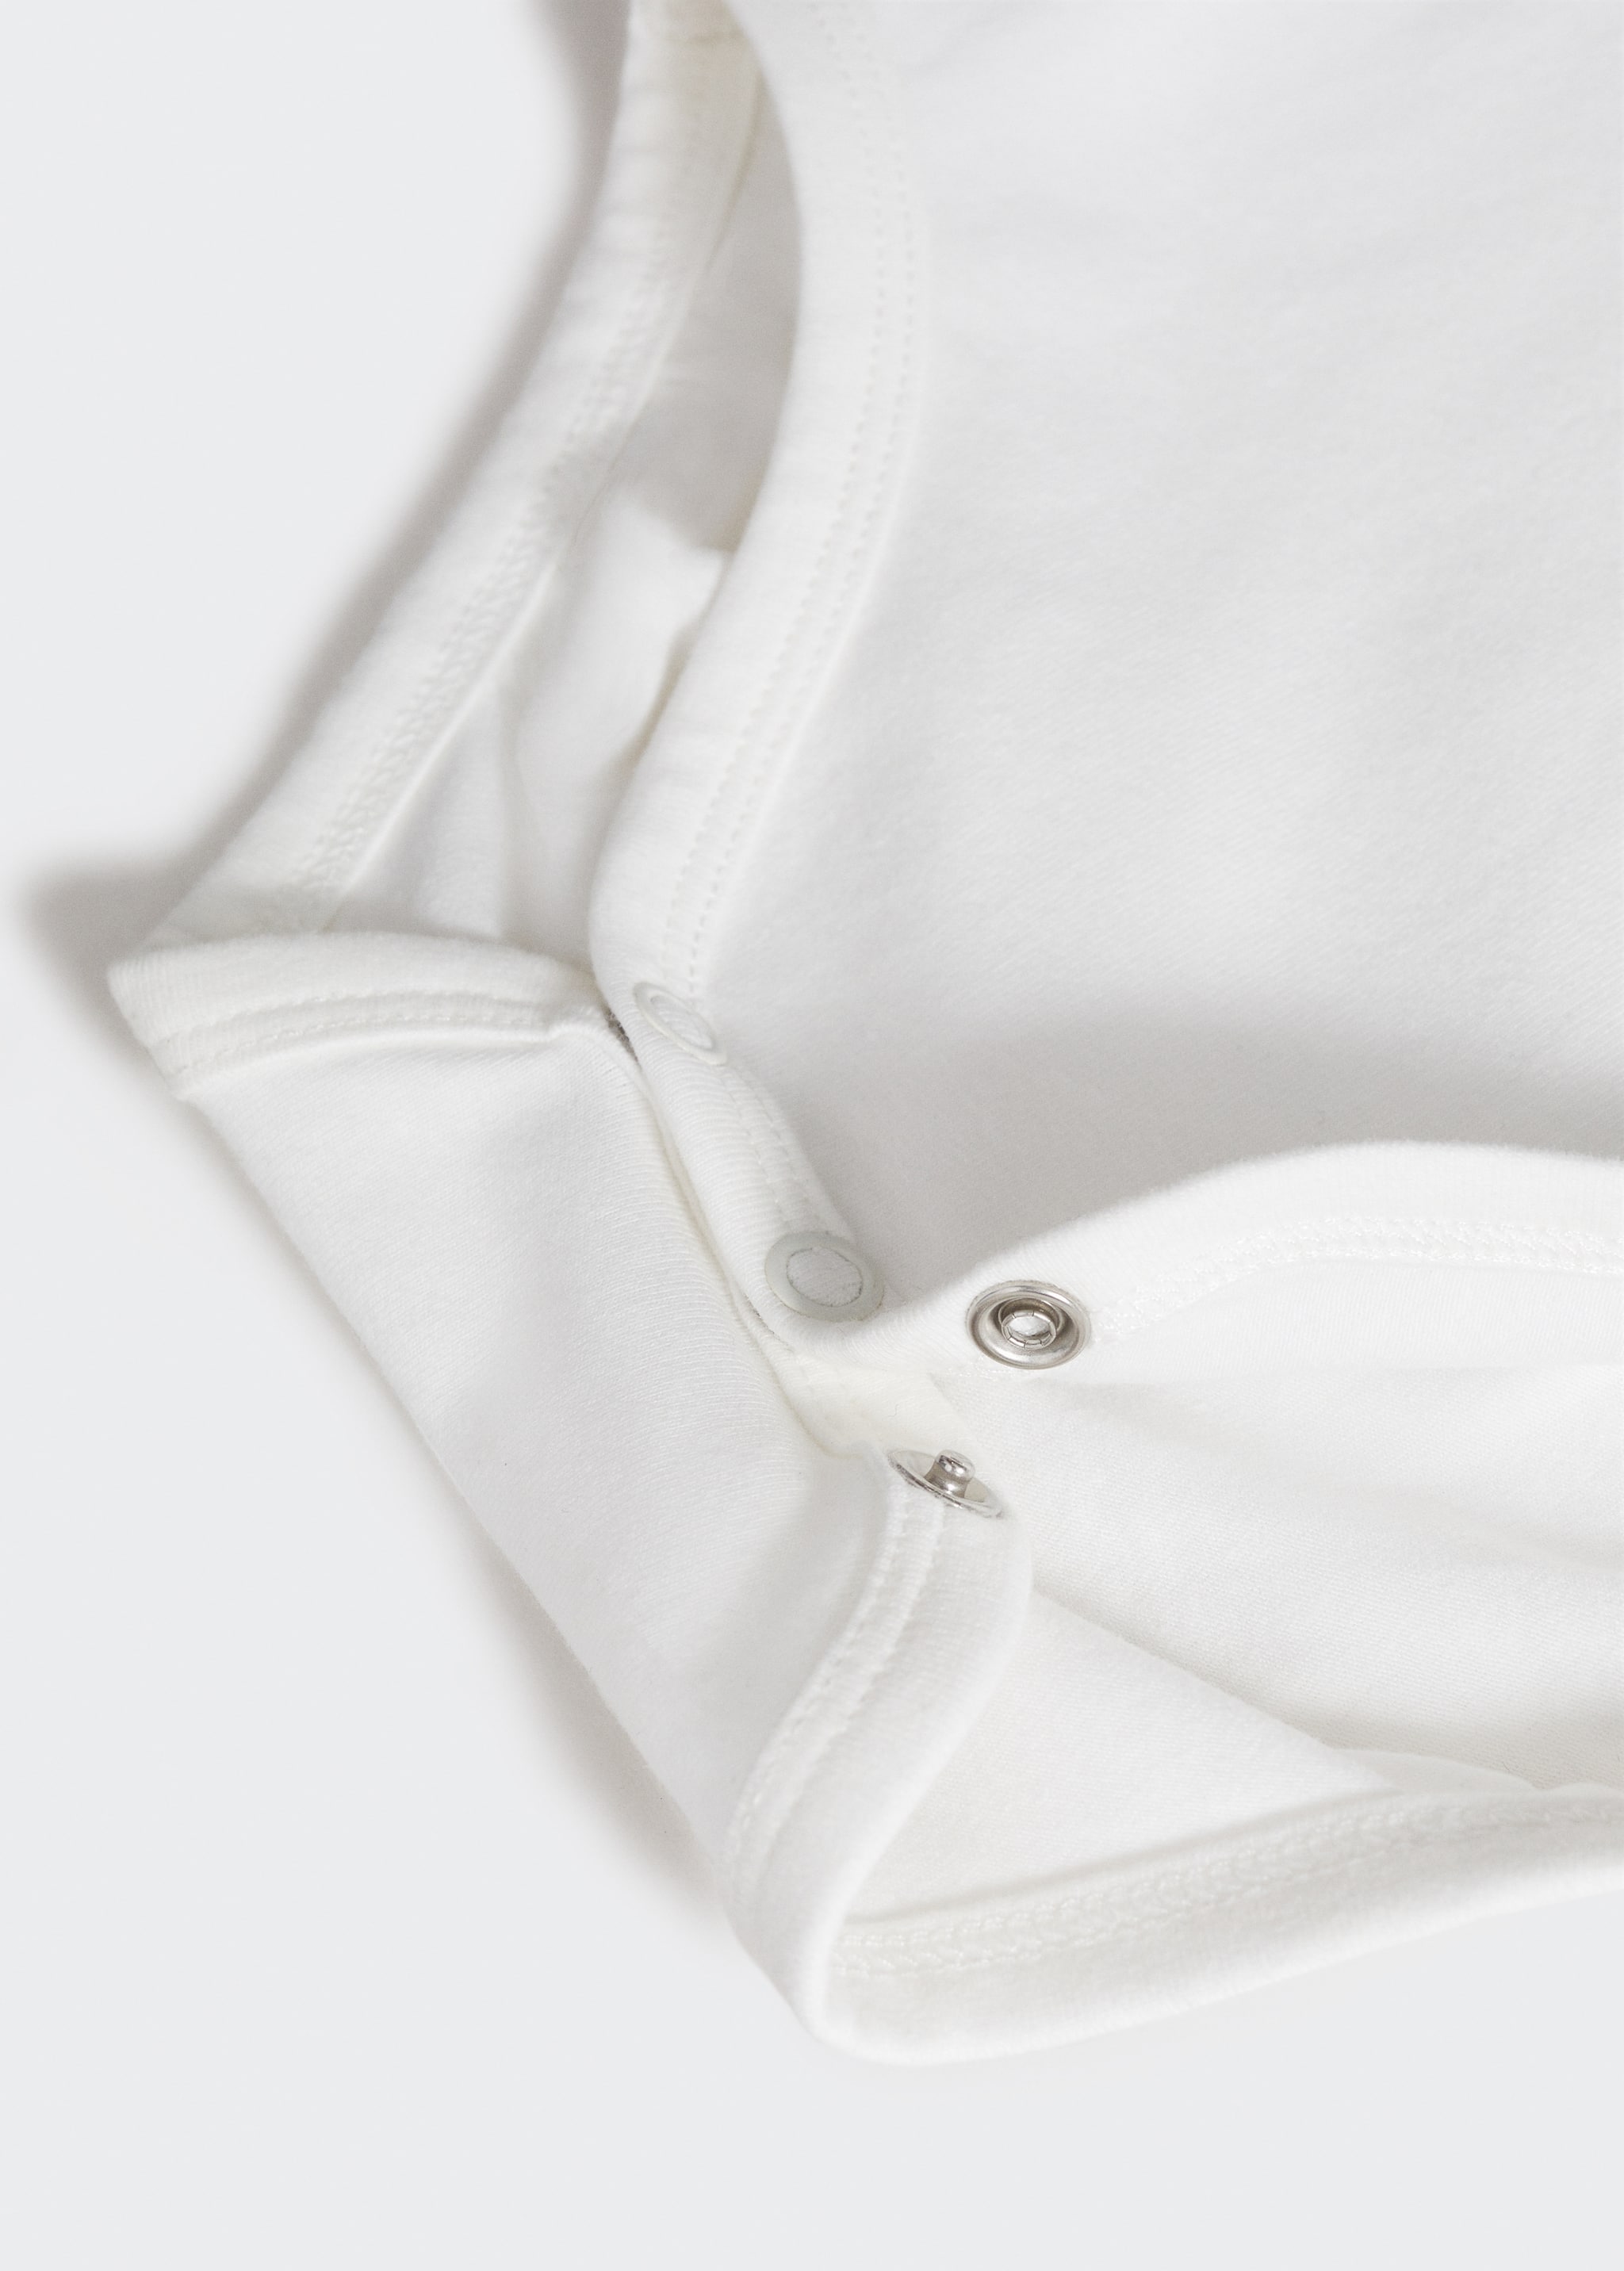 Cotton bodysuit buttons - Details of the article 8